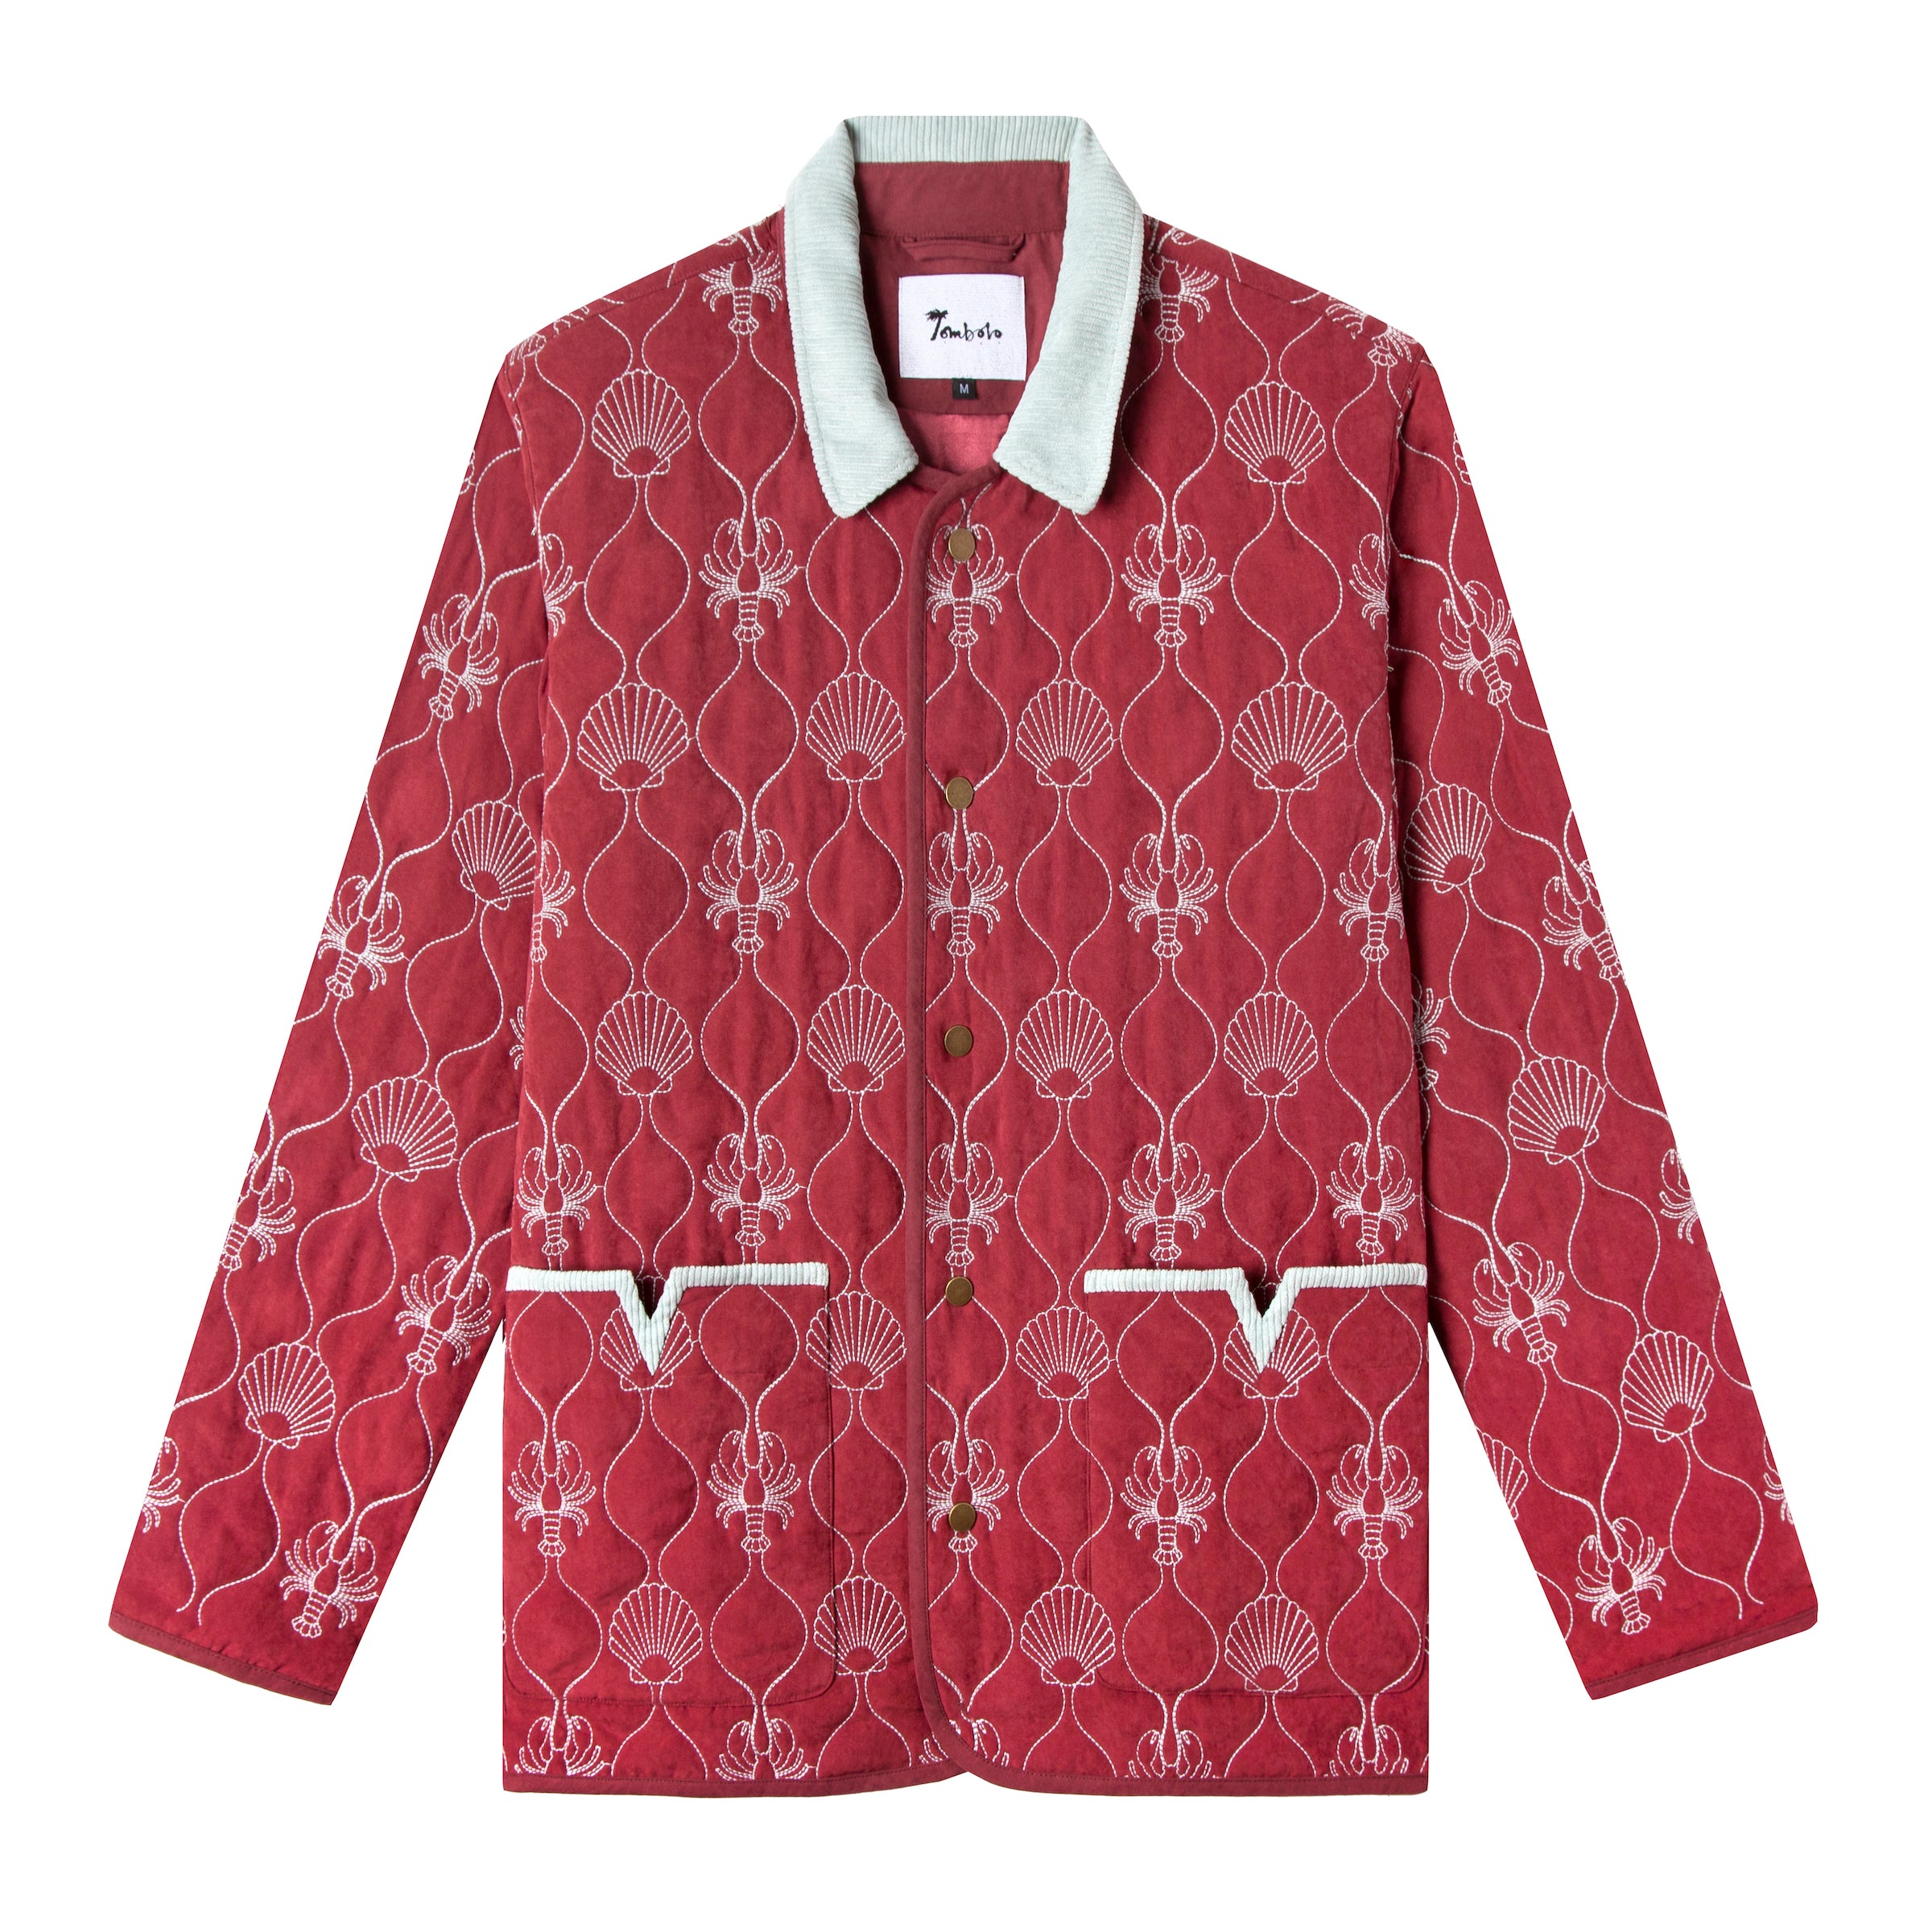 T-shirt Louis Vuitton x Supreme Red size L International in Cotton